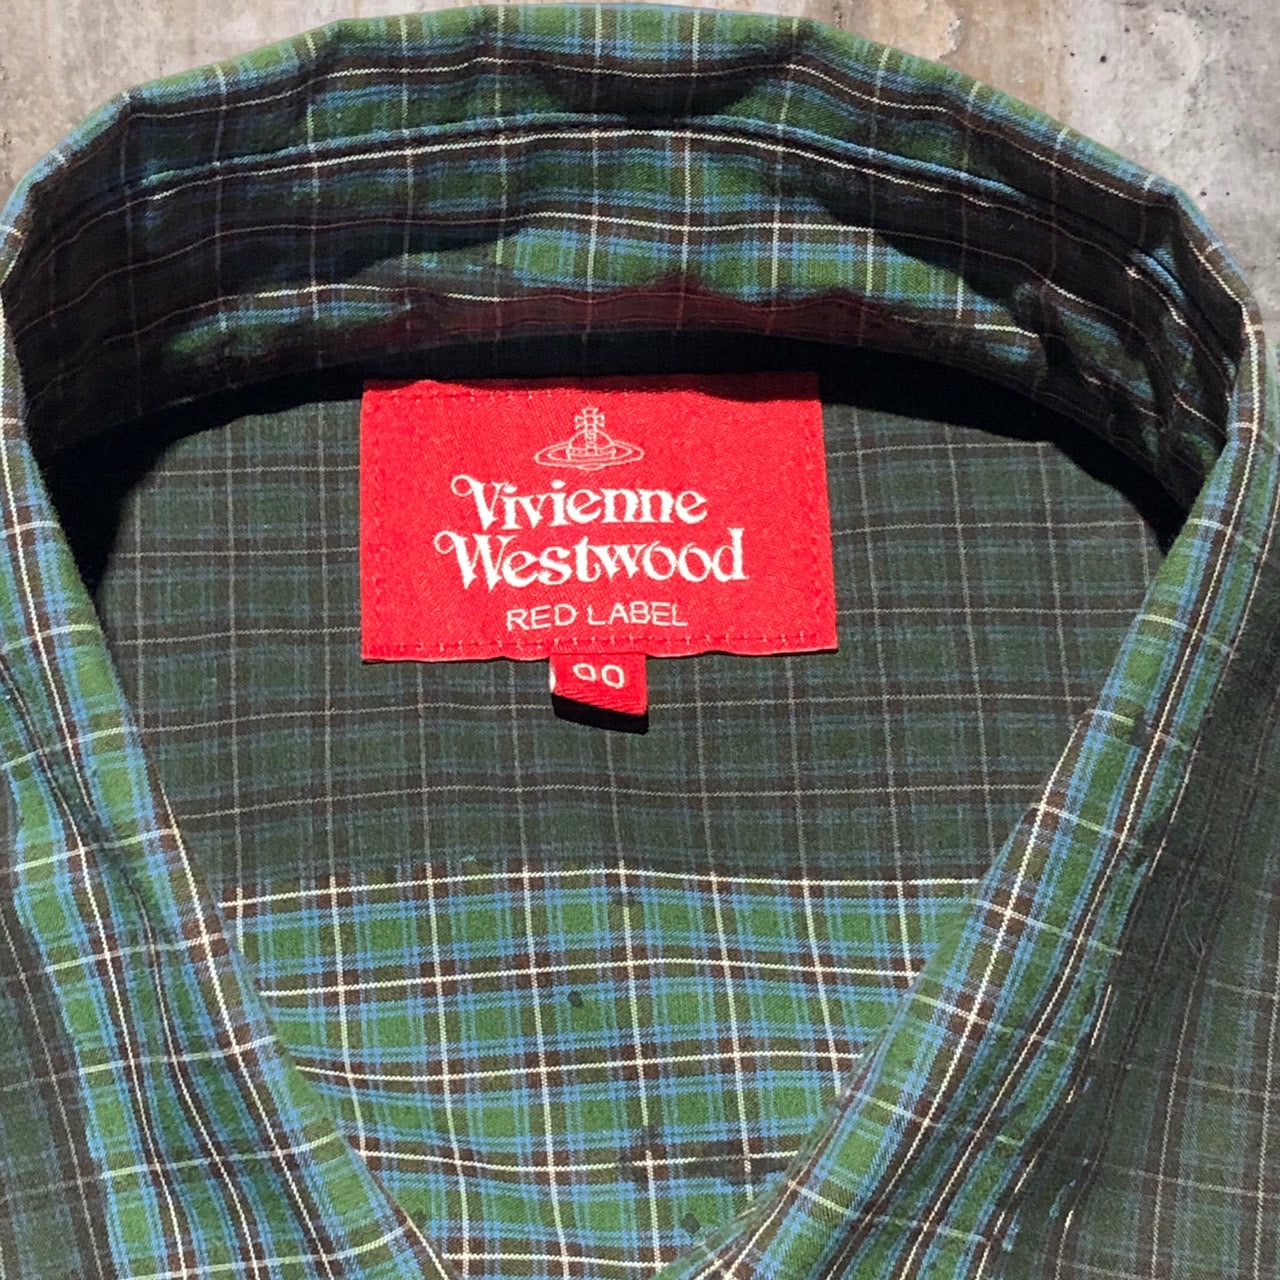 Vivienne Westwood RED LABEL(ヴィヴィアンウエストウッドレッドレーベル) オーブロゴオーバーサイズカモフラチェックシャツ 17-12-831001 00(FREE) グリーン